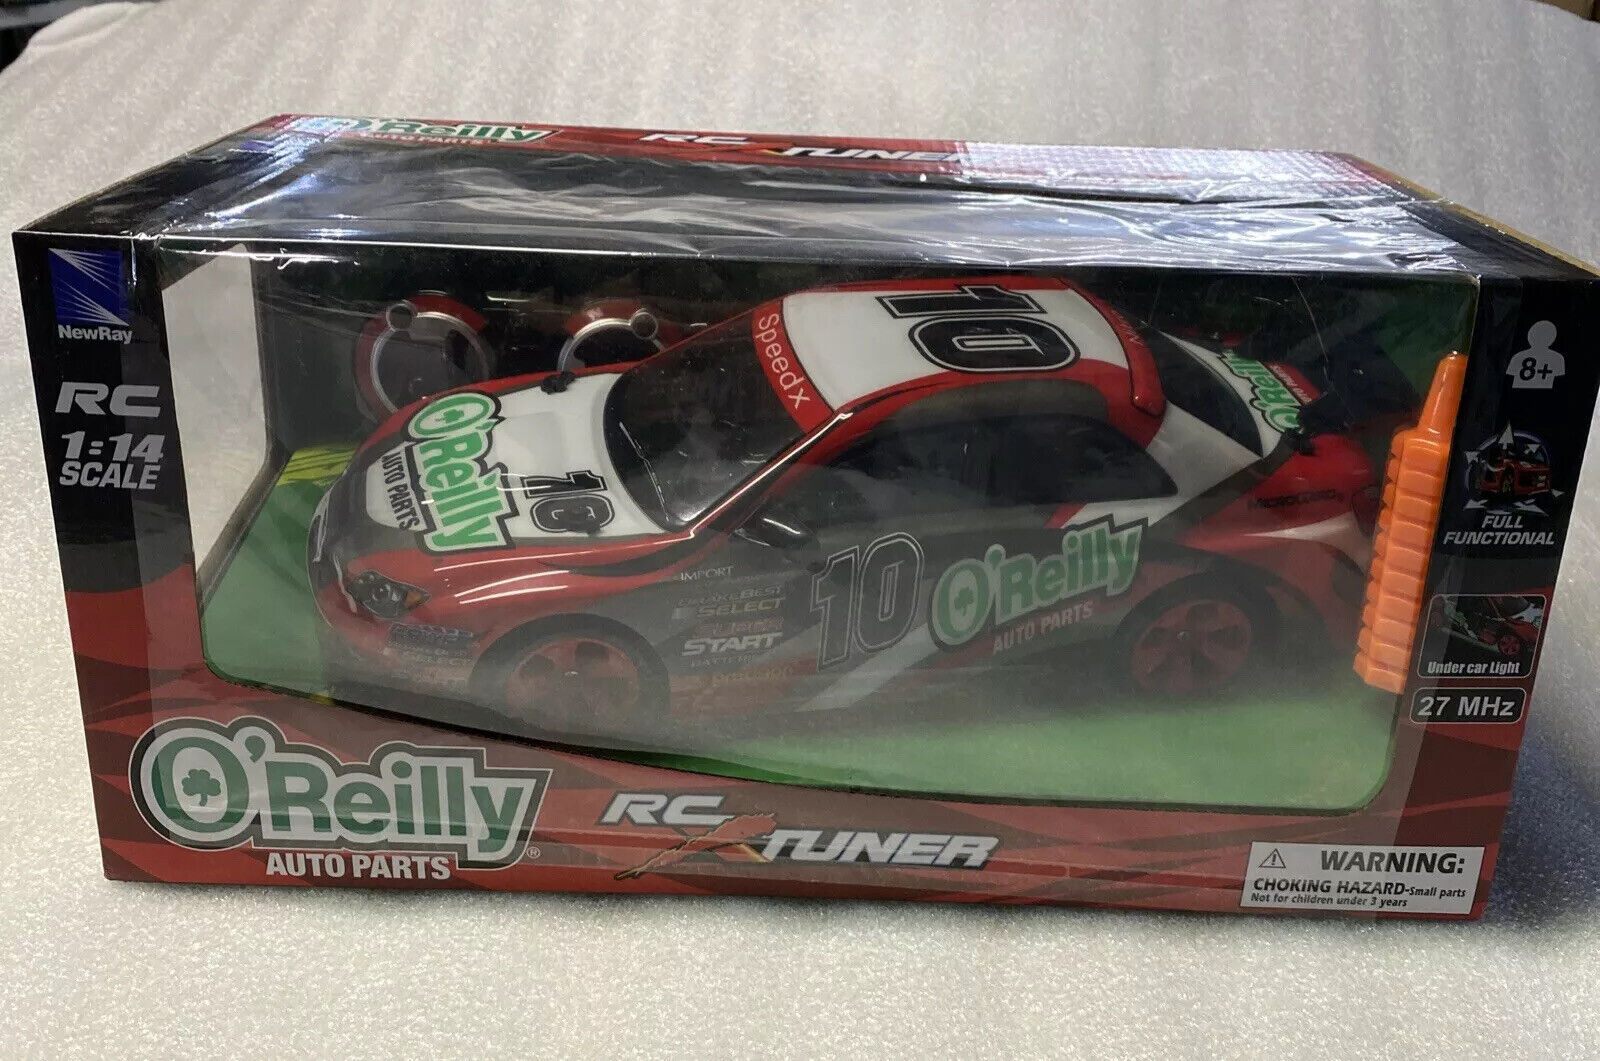 NEW RARE NewRay RC 1:14 O'Reilly Auto Parts Xtuner Radio Control Rally Race Car